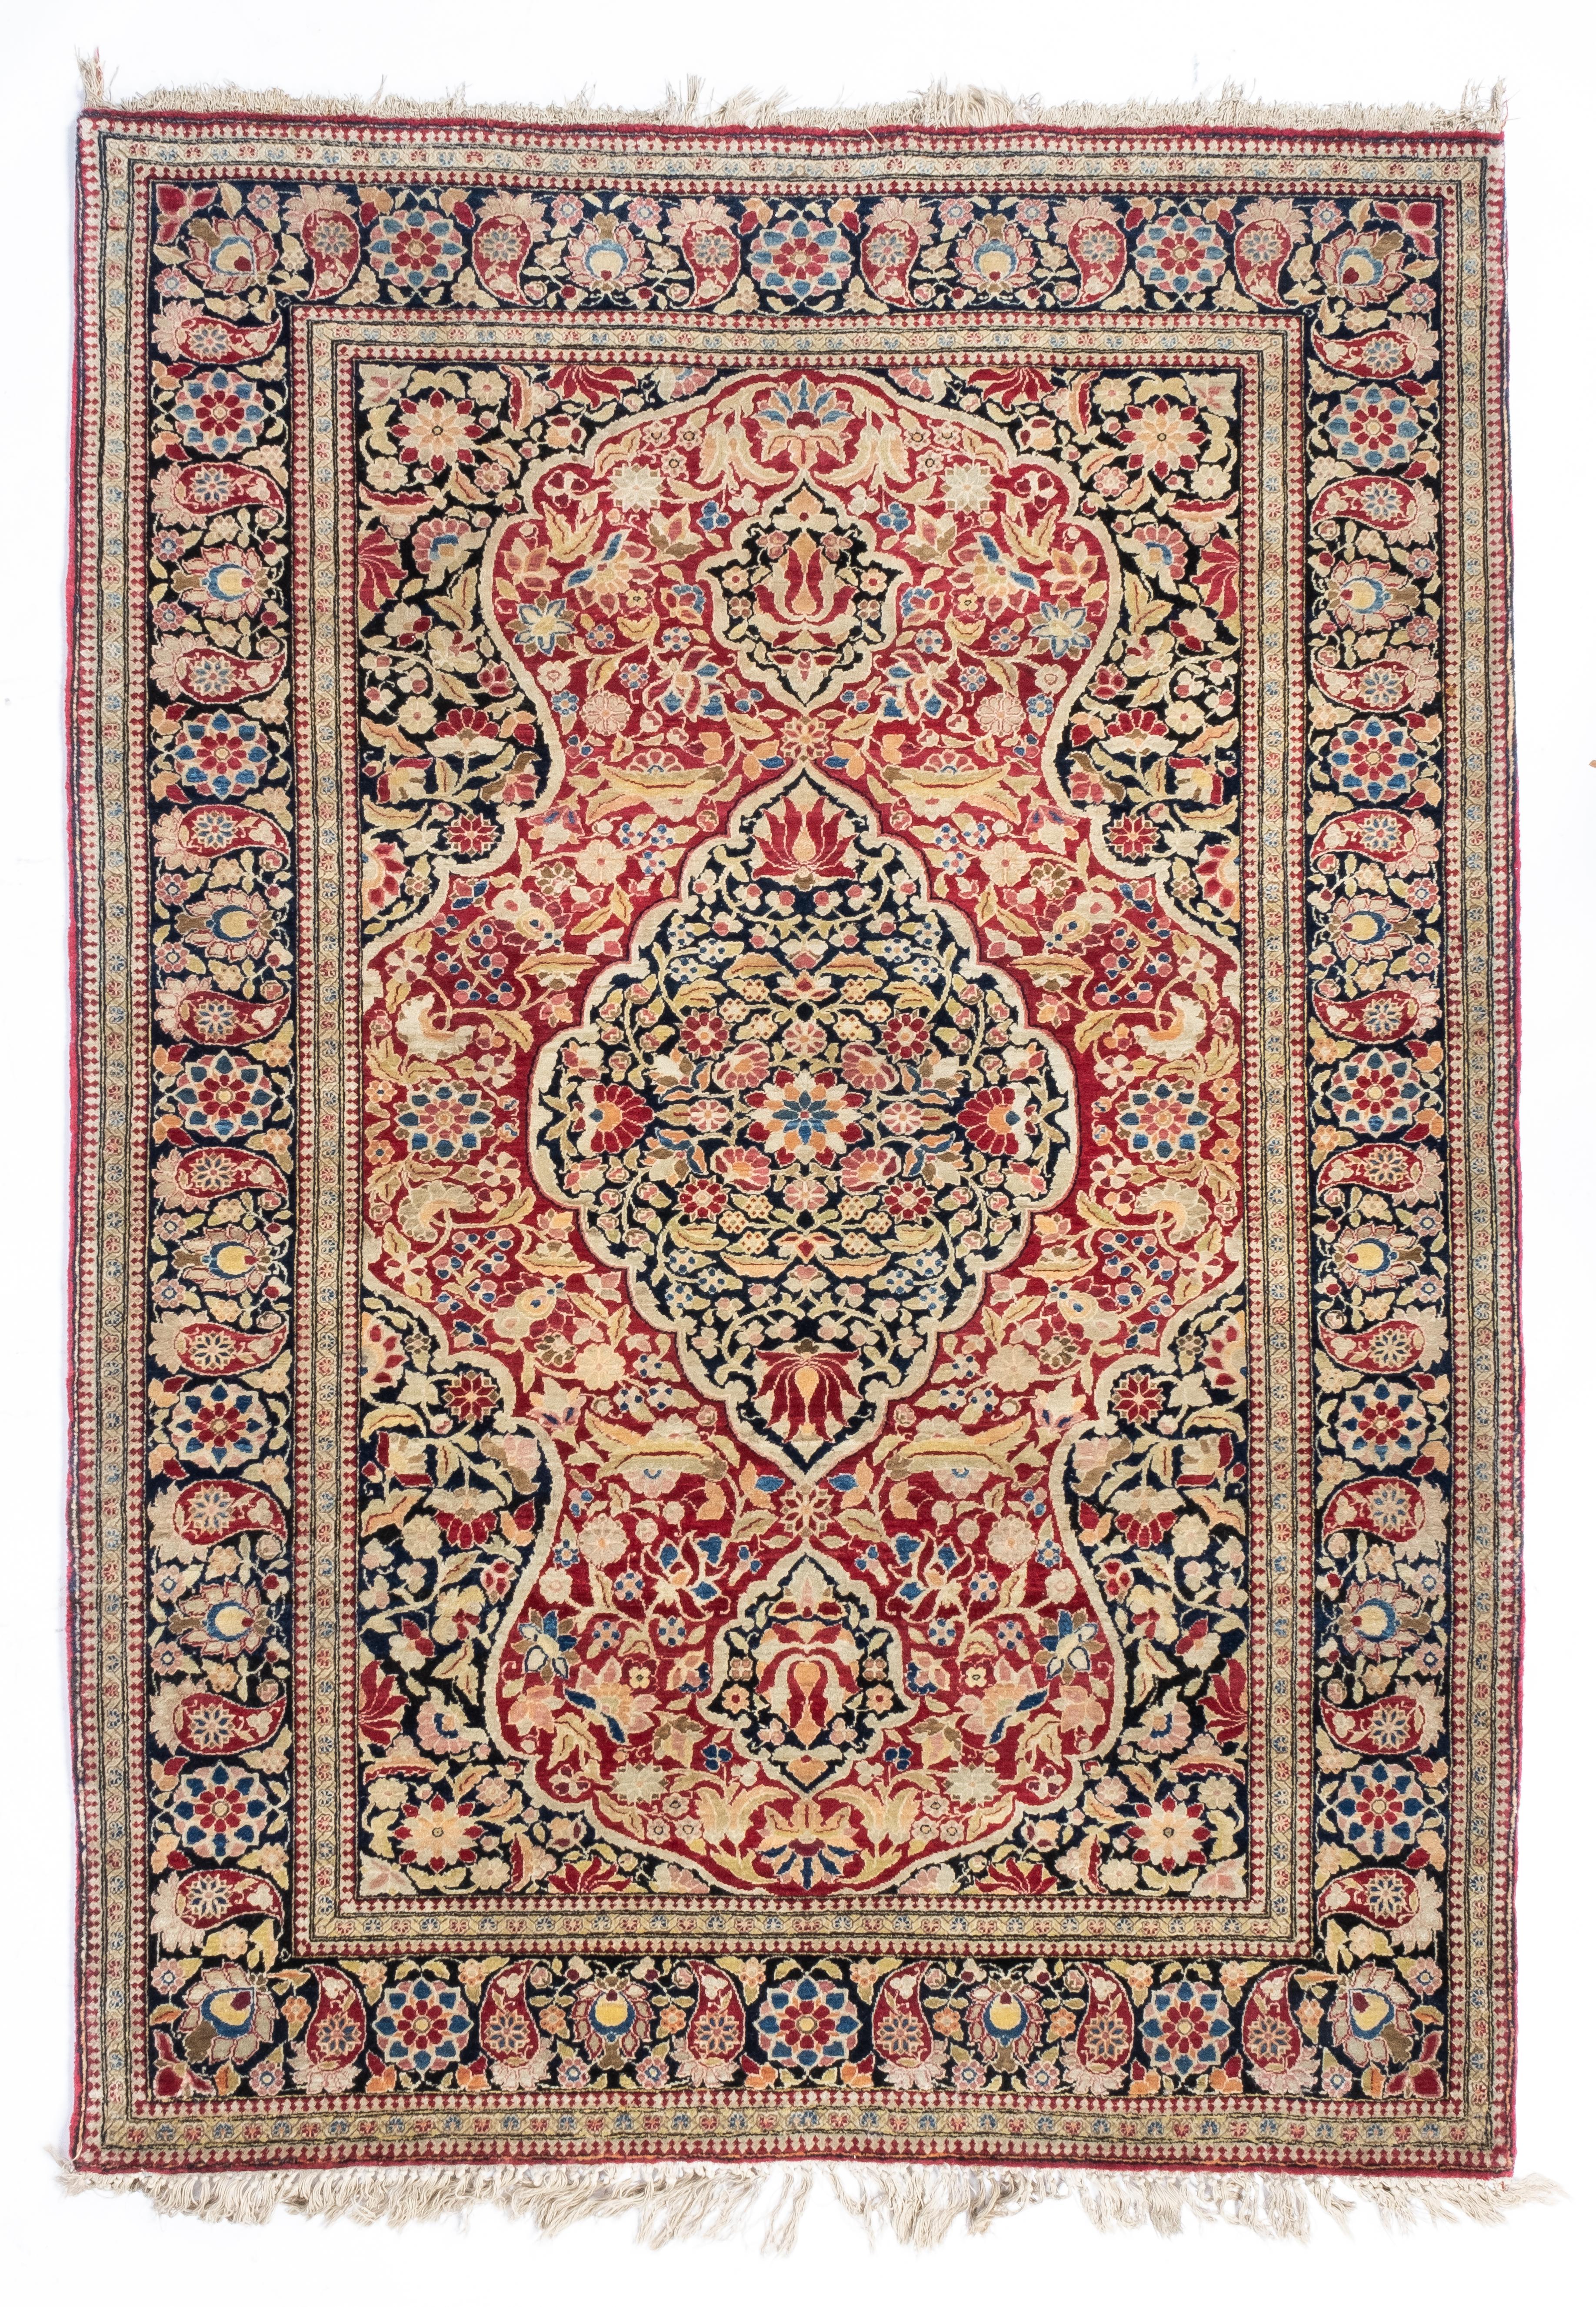 An antique Isfahan wool rug